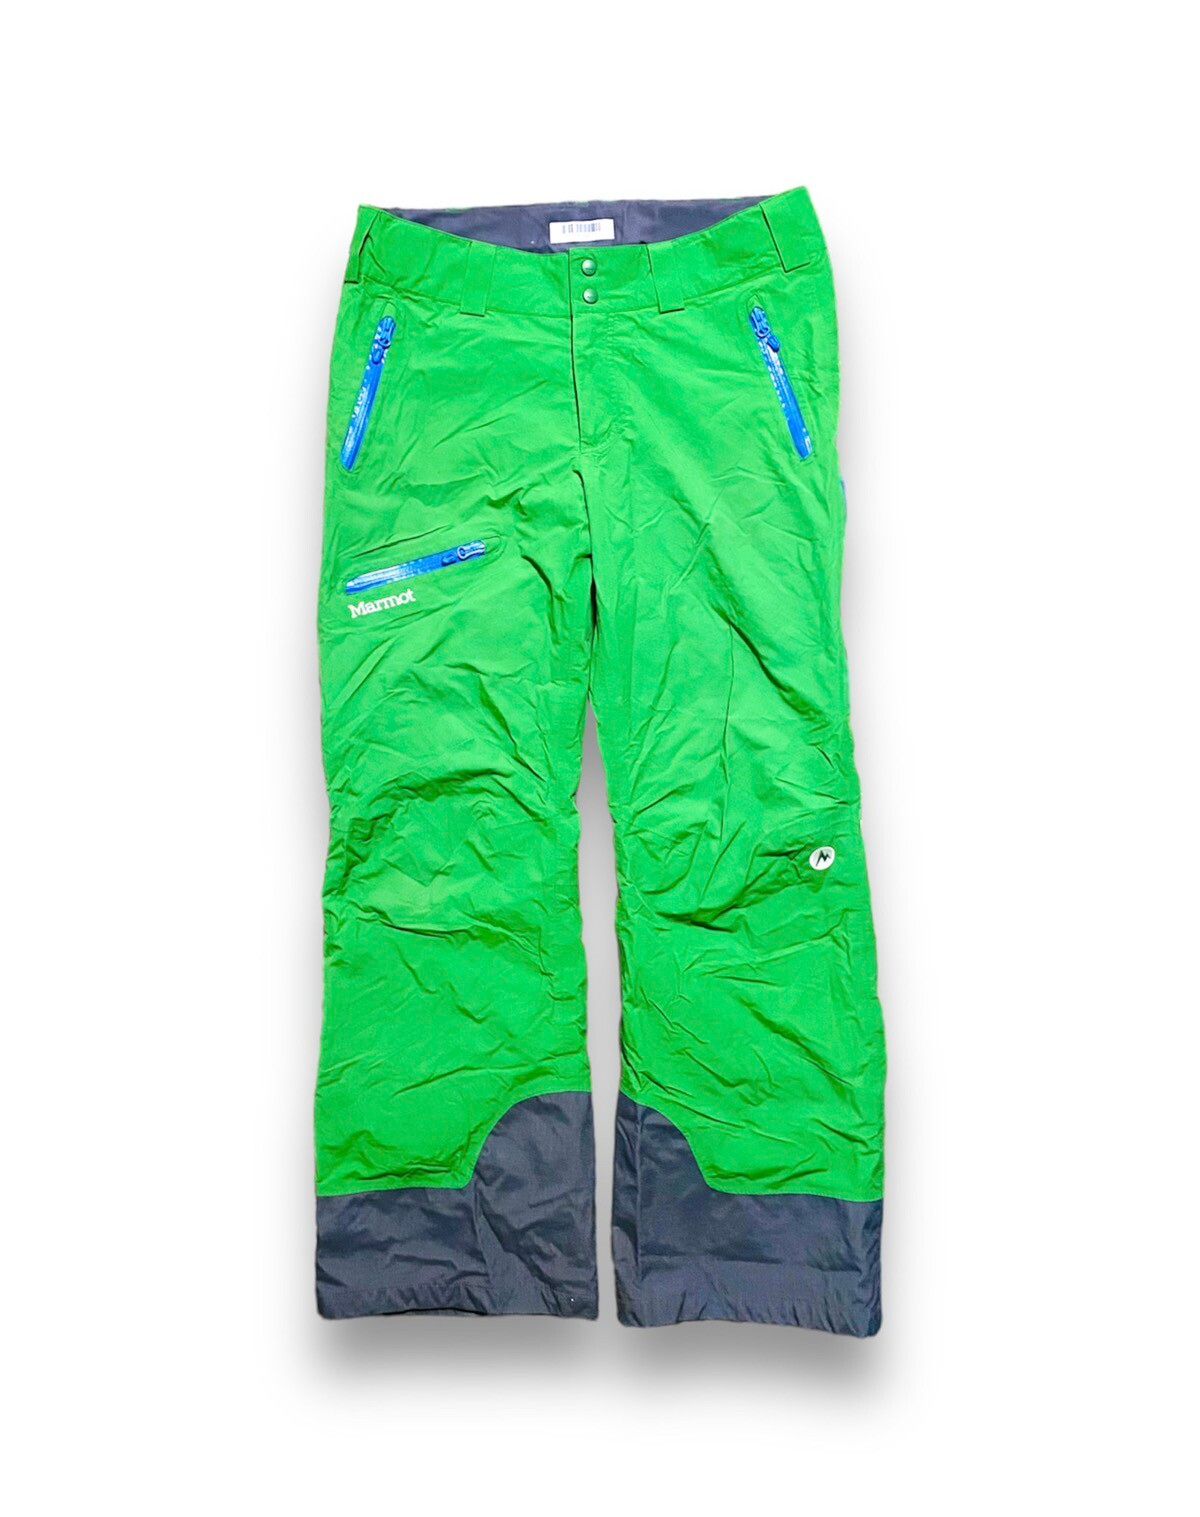 Marmot GTX Pants Trousers Skiing Hiking Outdoor Green L/XL - 1